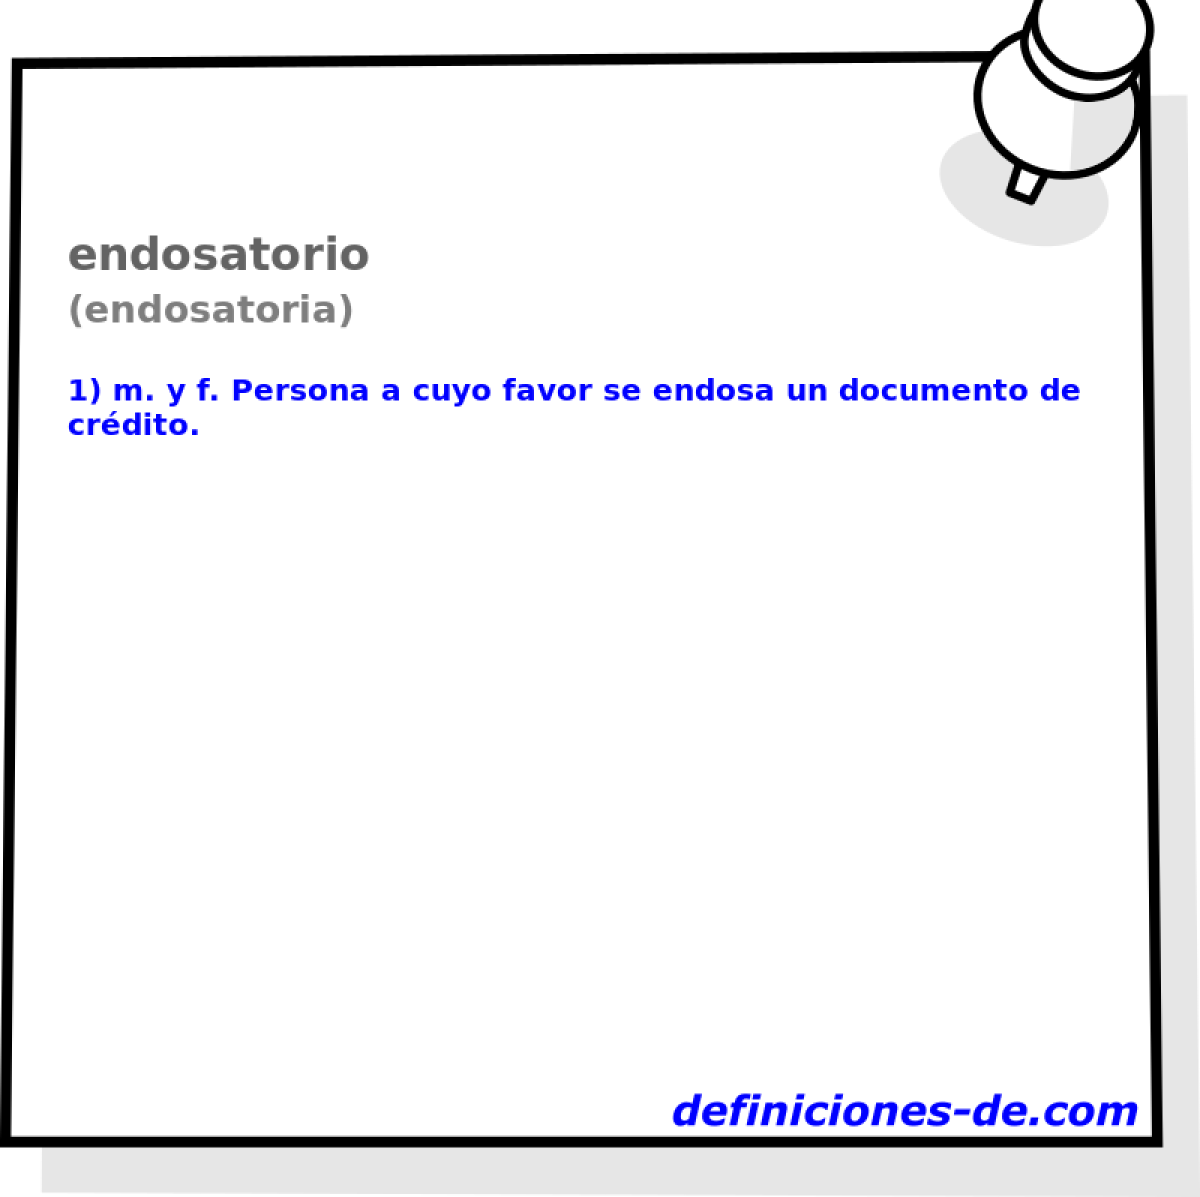 endosatorio (endosatoria)